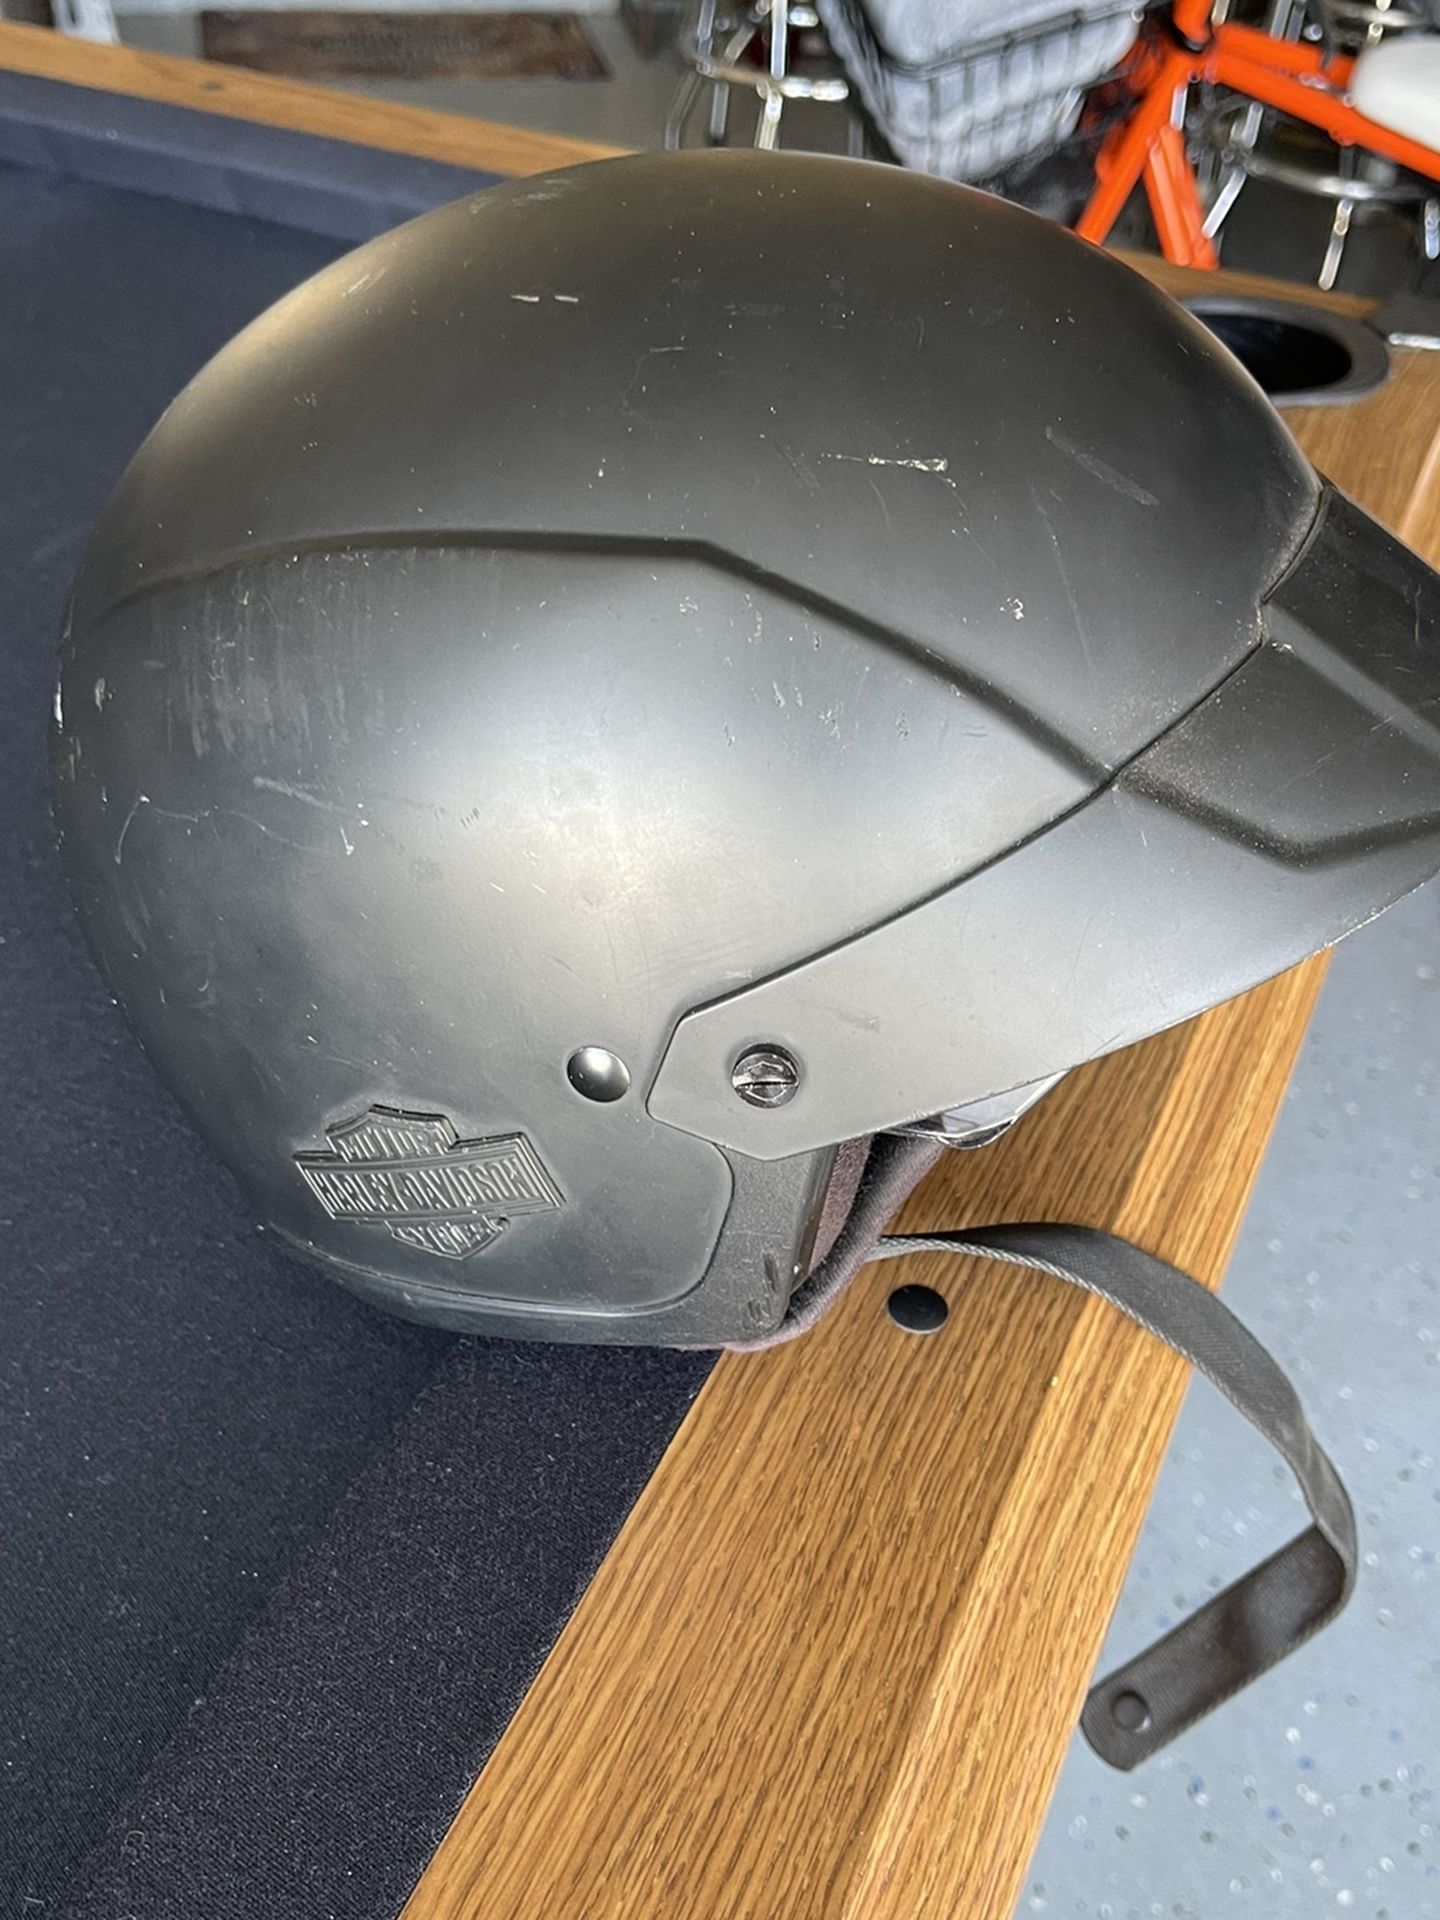 Harley Davison motorcycle helmet